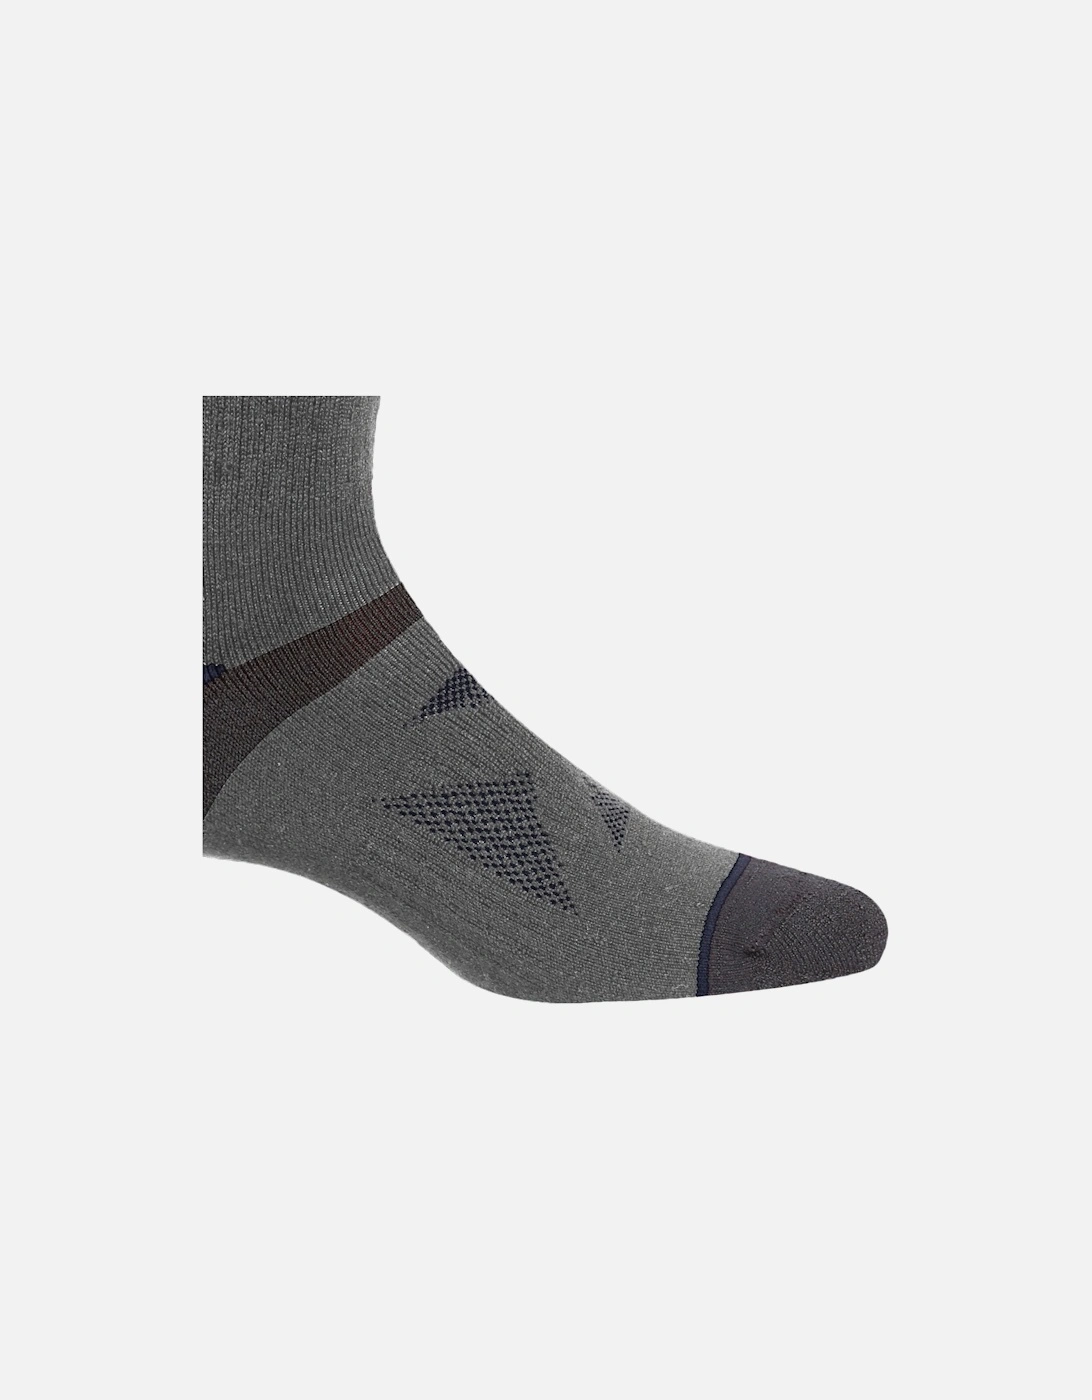 Unisex Adult Wool Hiking Boot Socks (Pack of 2)